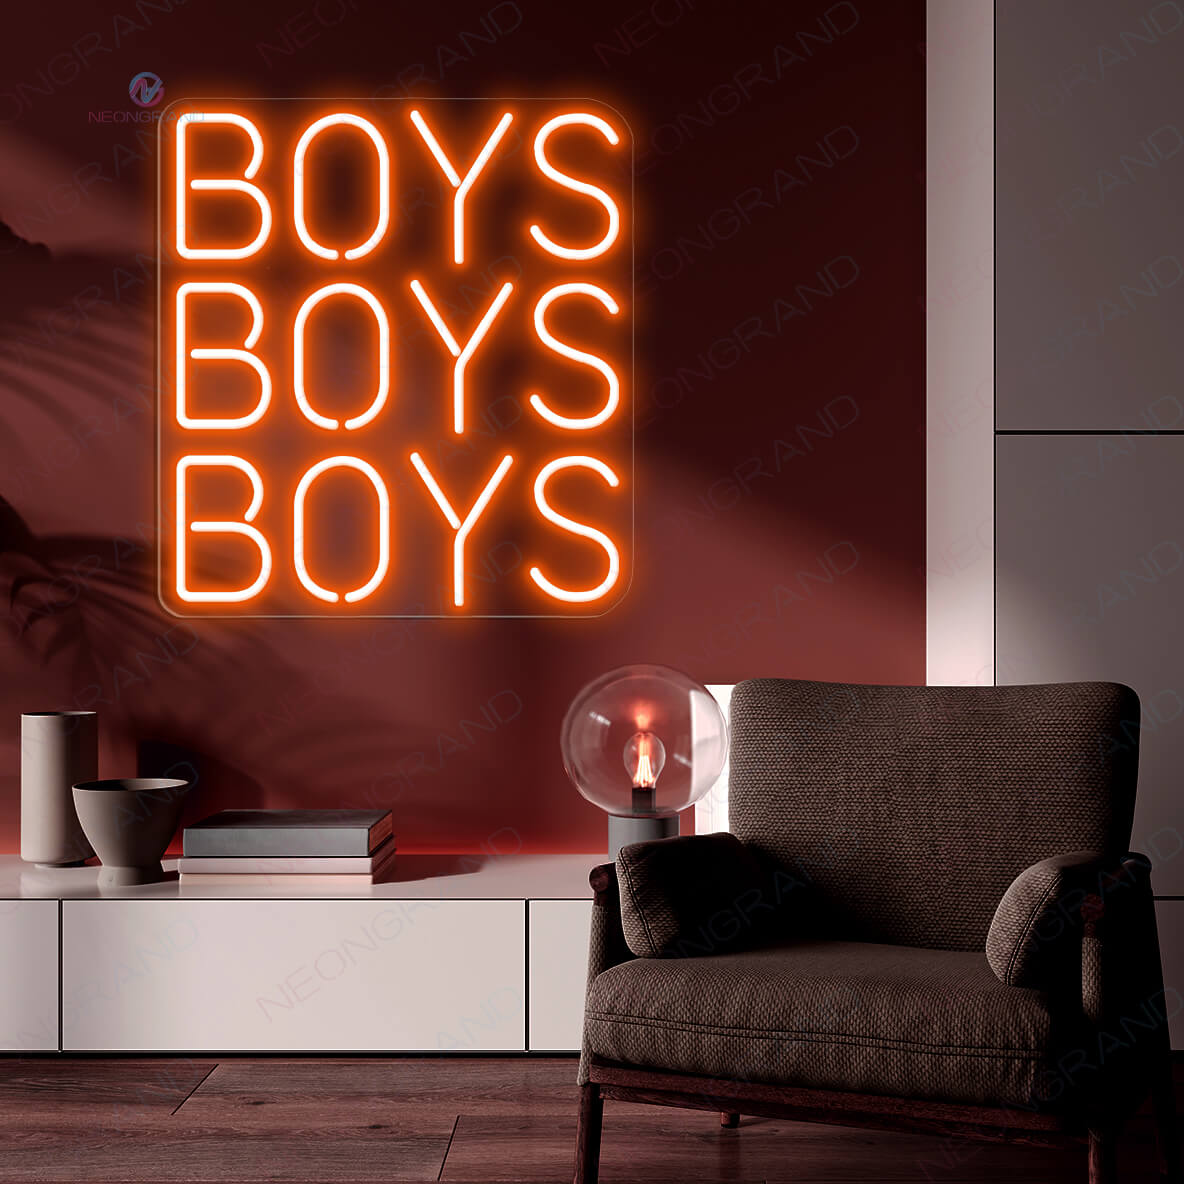 Boys Neon Sign Boys Boys Boys Led Light orange